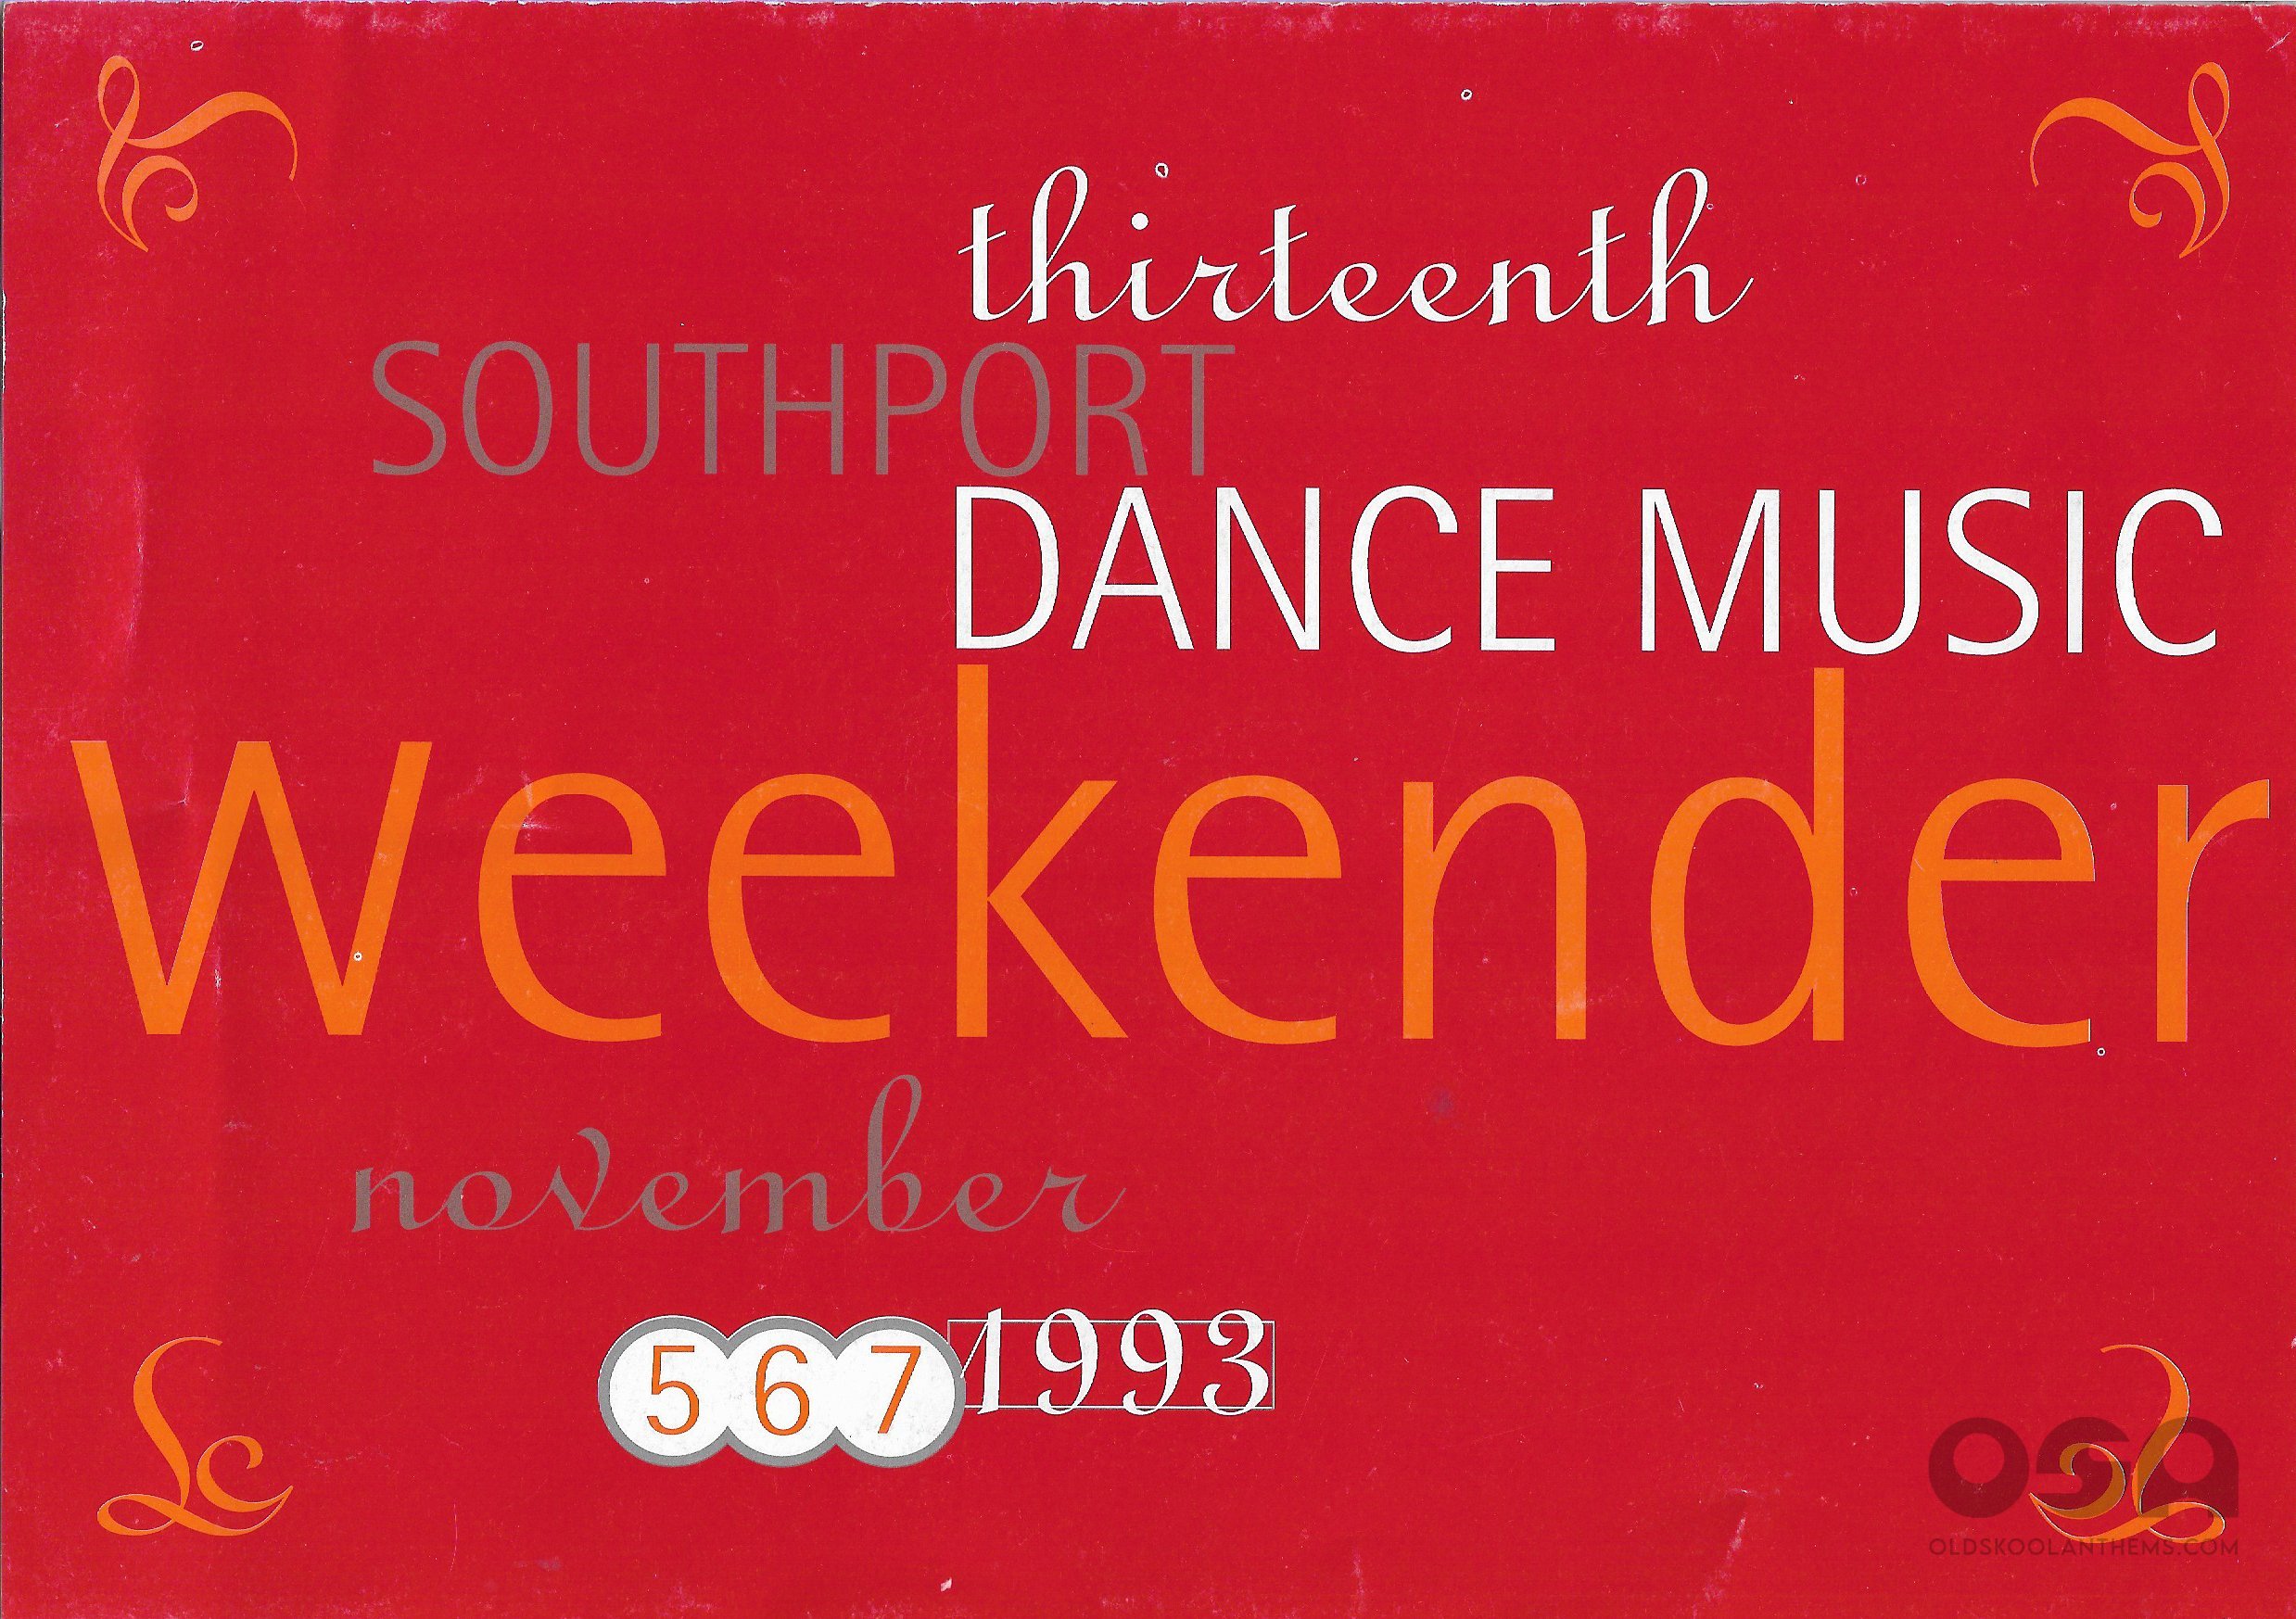 Southport Dance Music Weekender @ Pontins - 5th November 1993 - Front .jpg